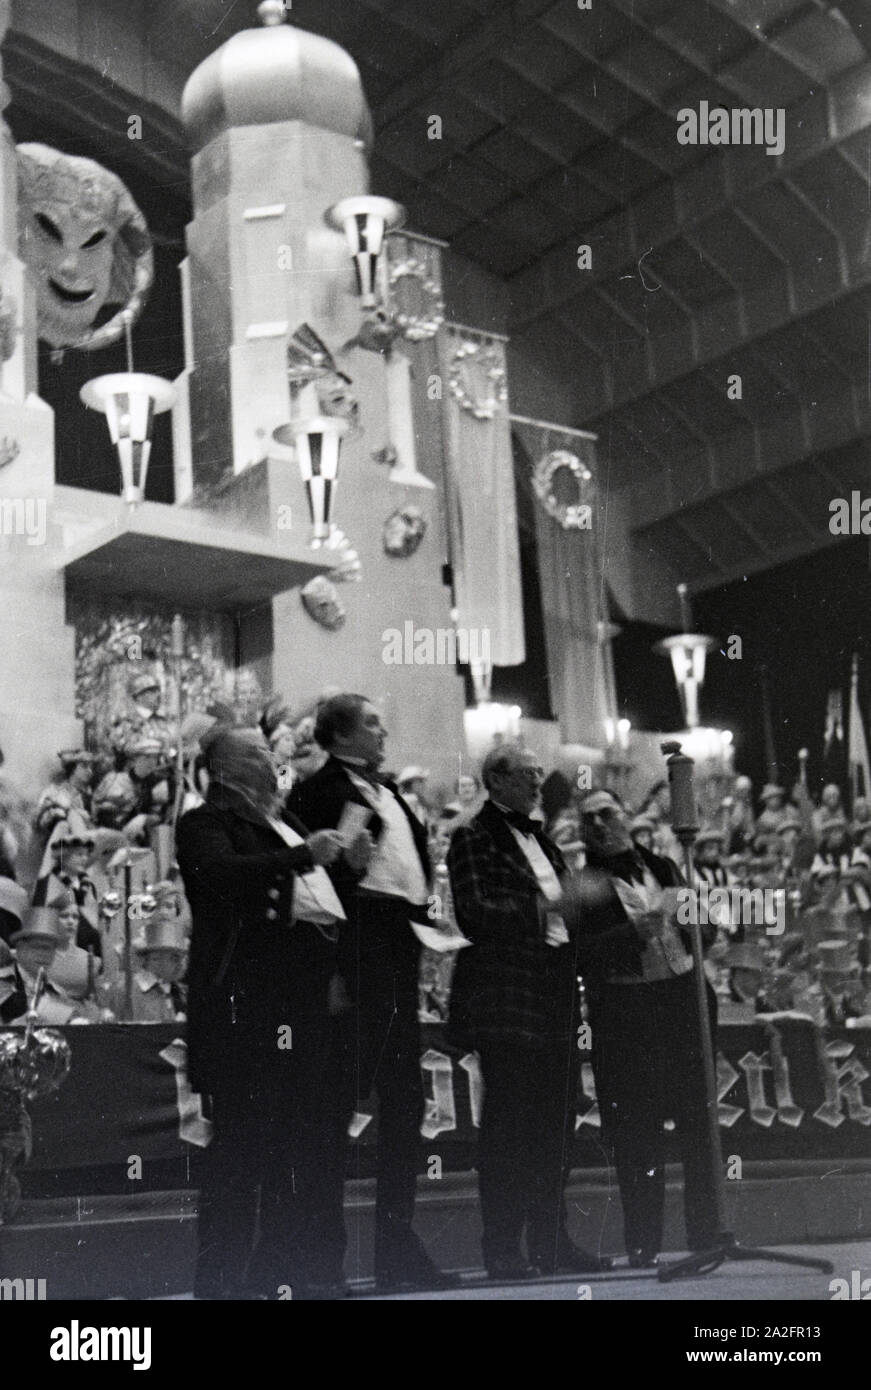 Büttenredner auf einer Karnevalssitzung, Deutsches Reich 1937. Il carnevale oratori a una sessione di carnevale, Germania 1937. Foto Stock